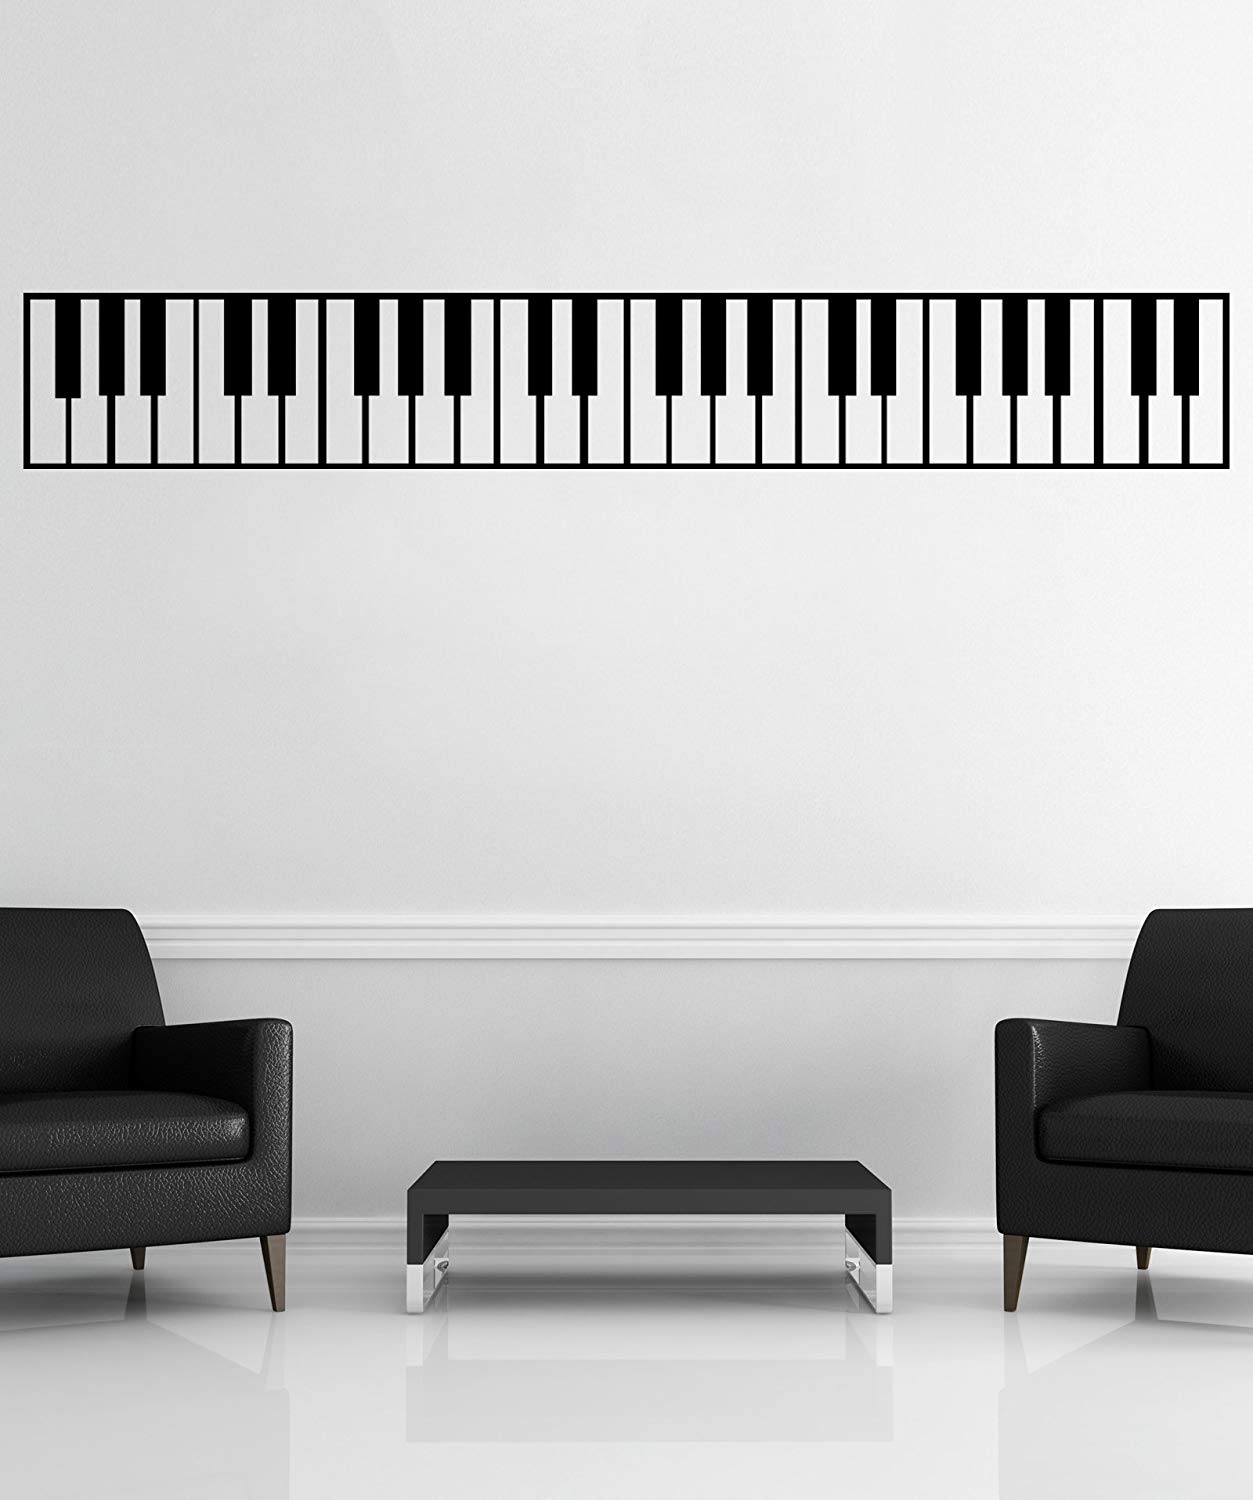 Piano Keys Painting On Wall - HD Wallpaper 